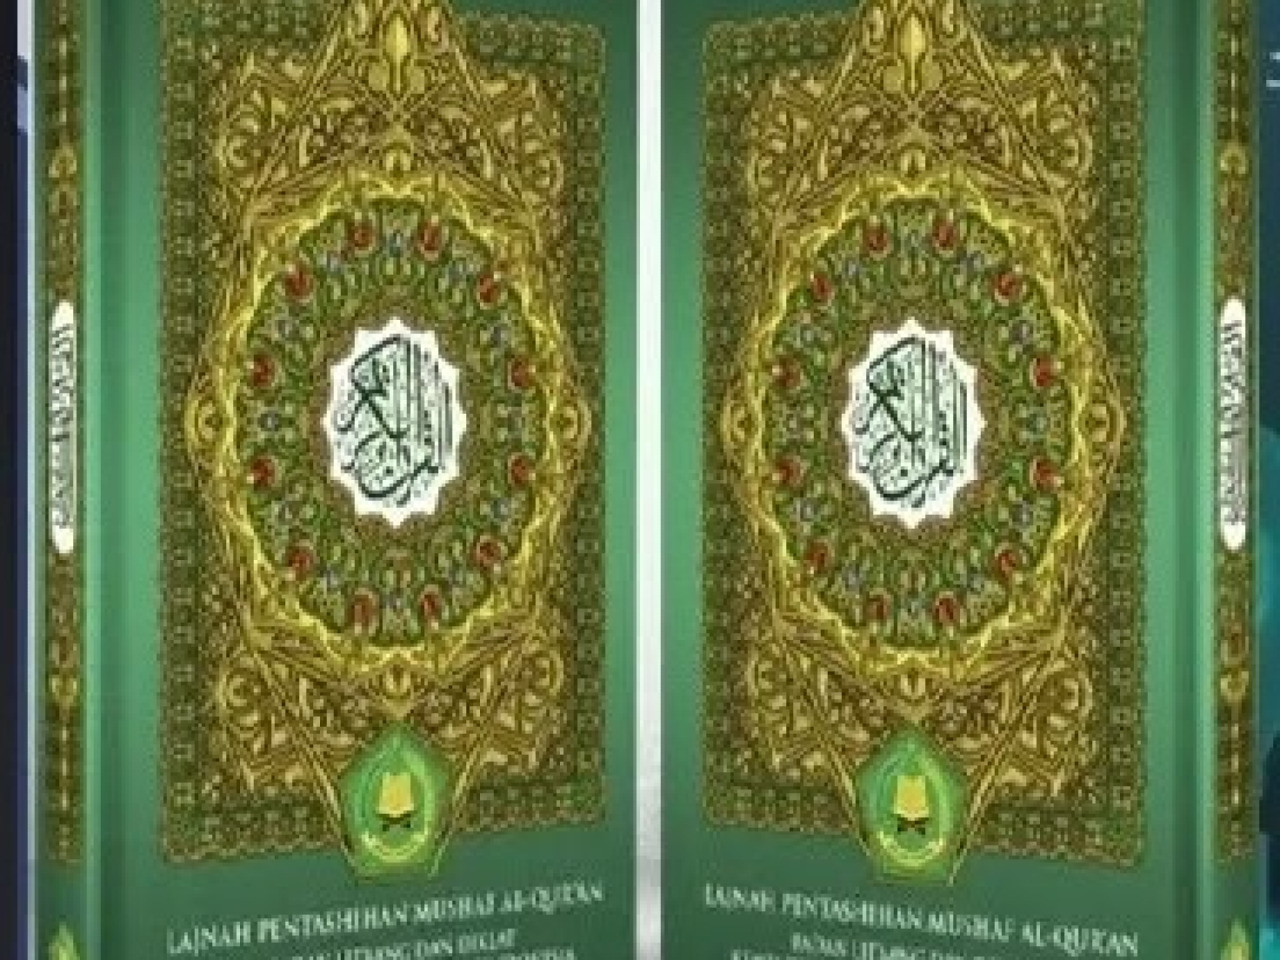 Terbaru! Presiden Jokowi Teken Peraturan Tunjangan Jabatan Pentashih Mushaf Al-Qur'an